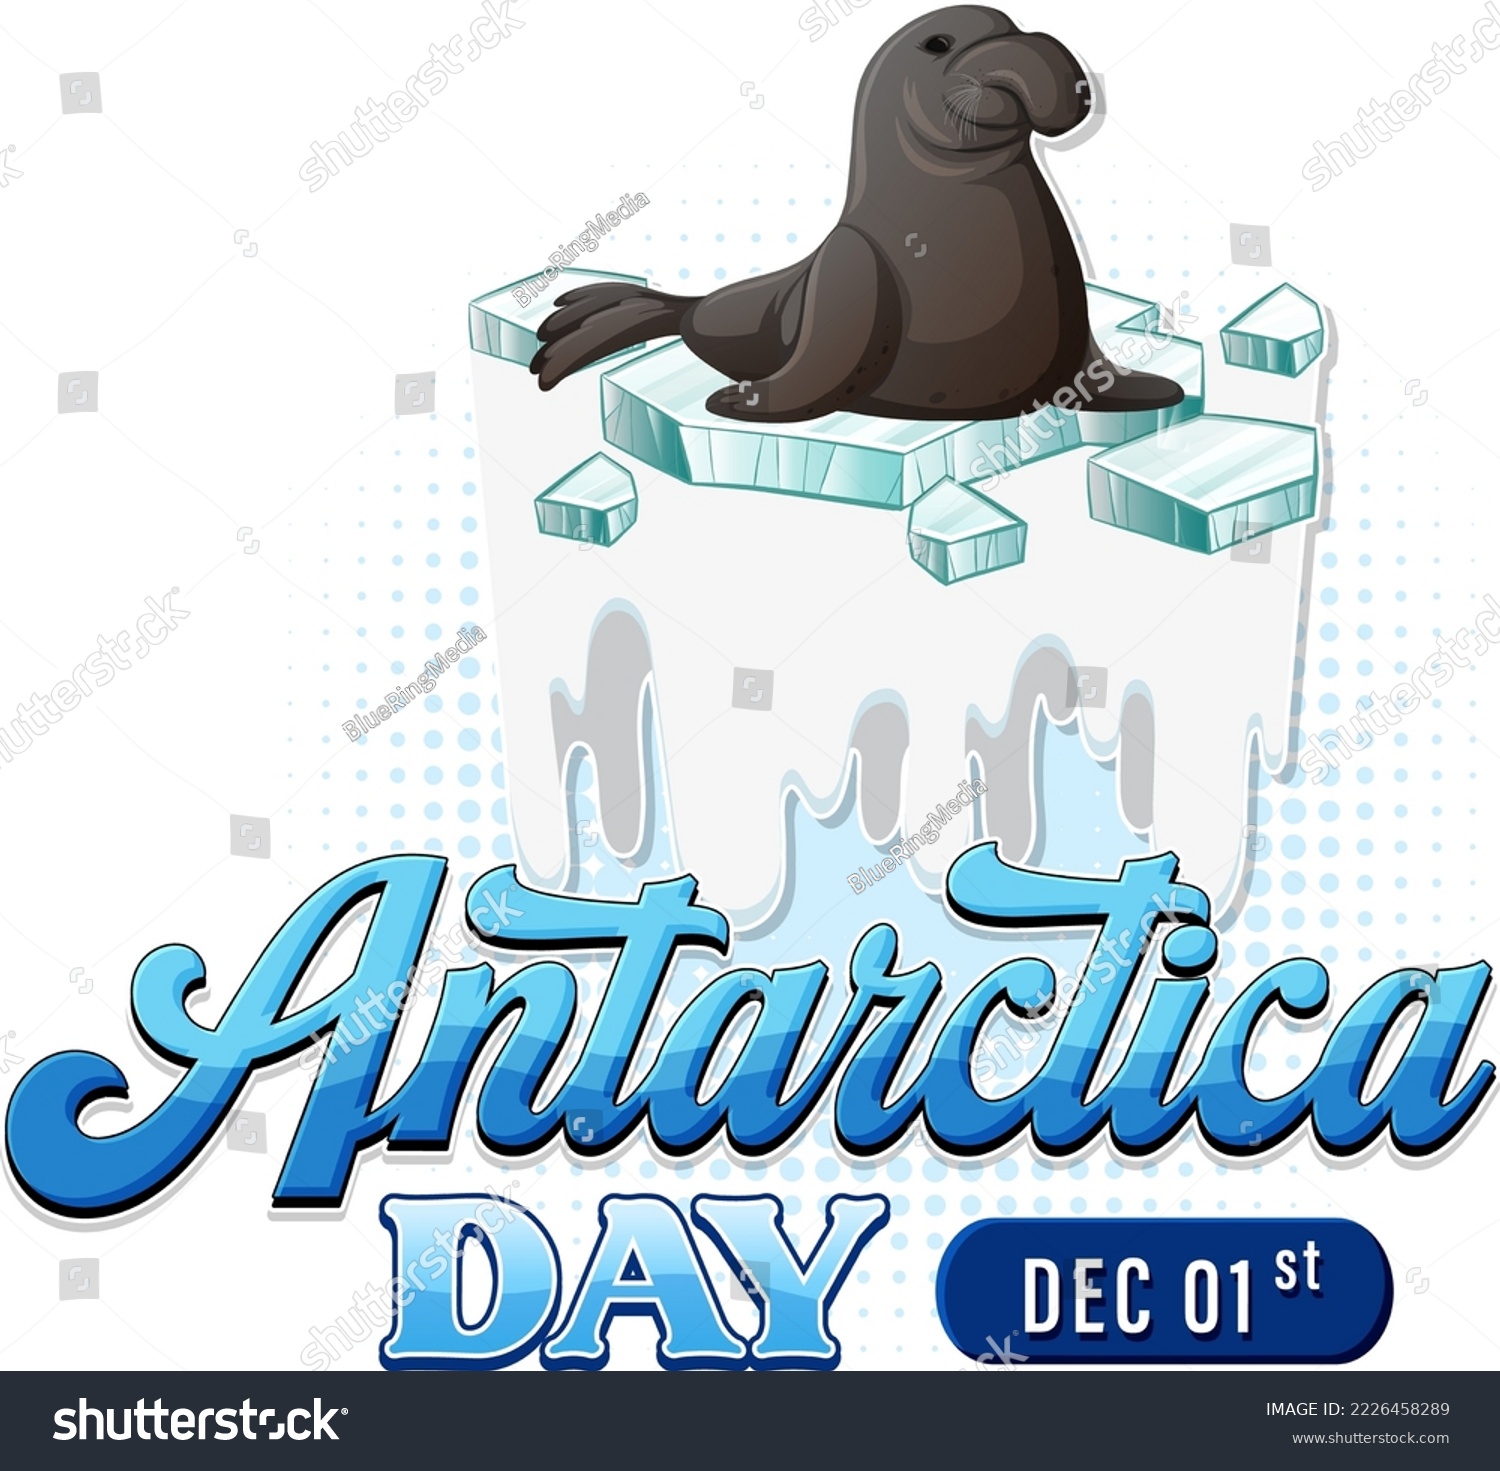 SVG of Happy Antarctica day poster design illustration svg